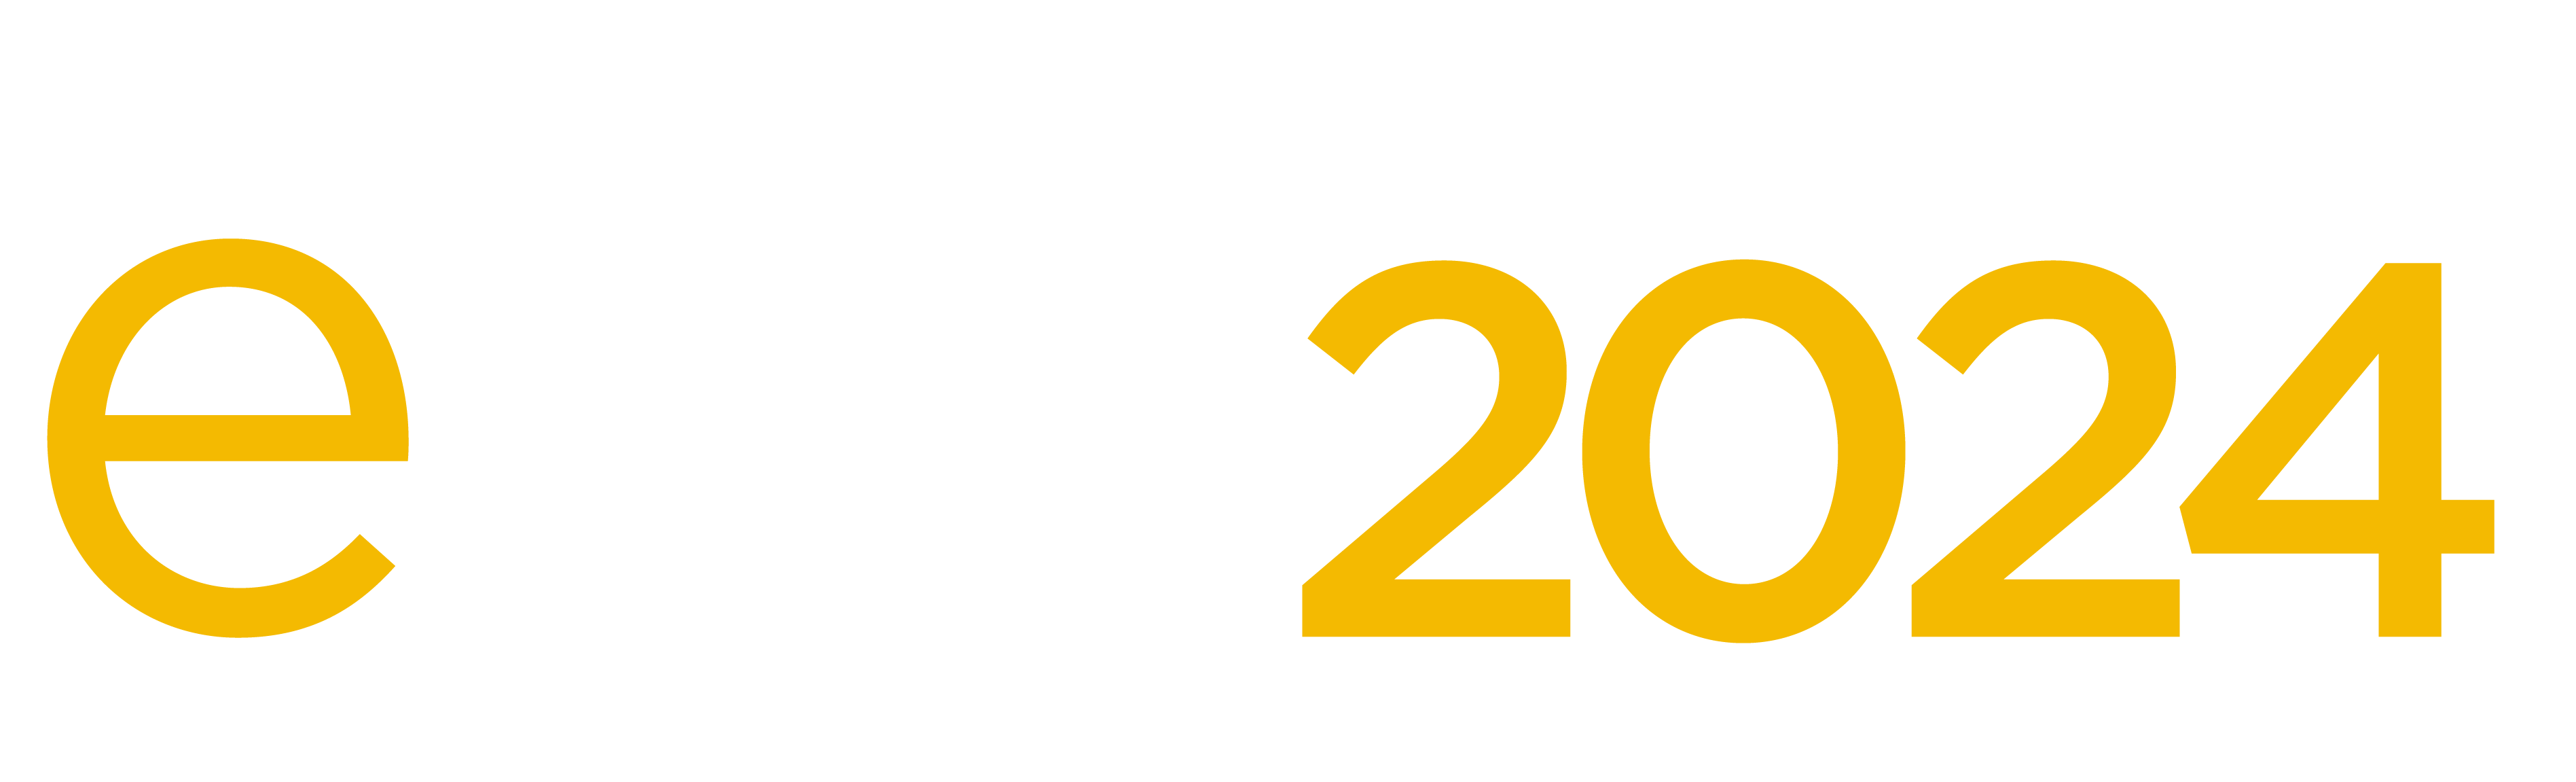 eBF 2023